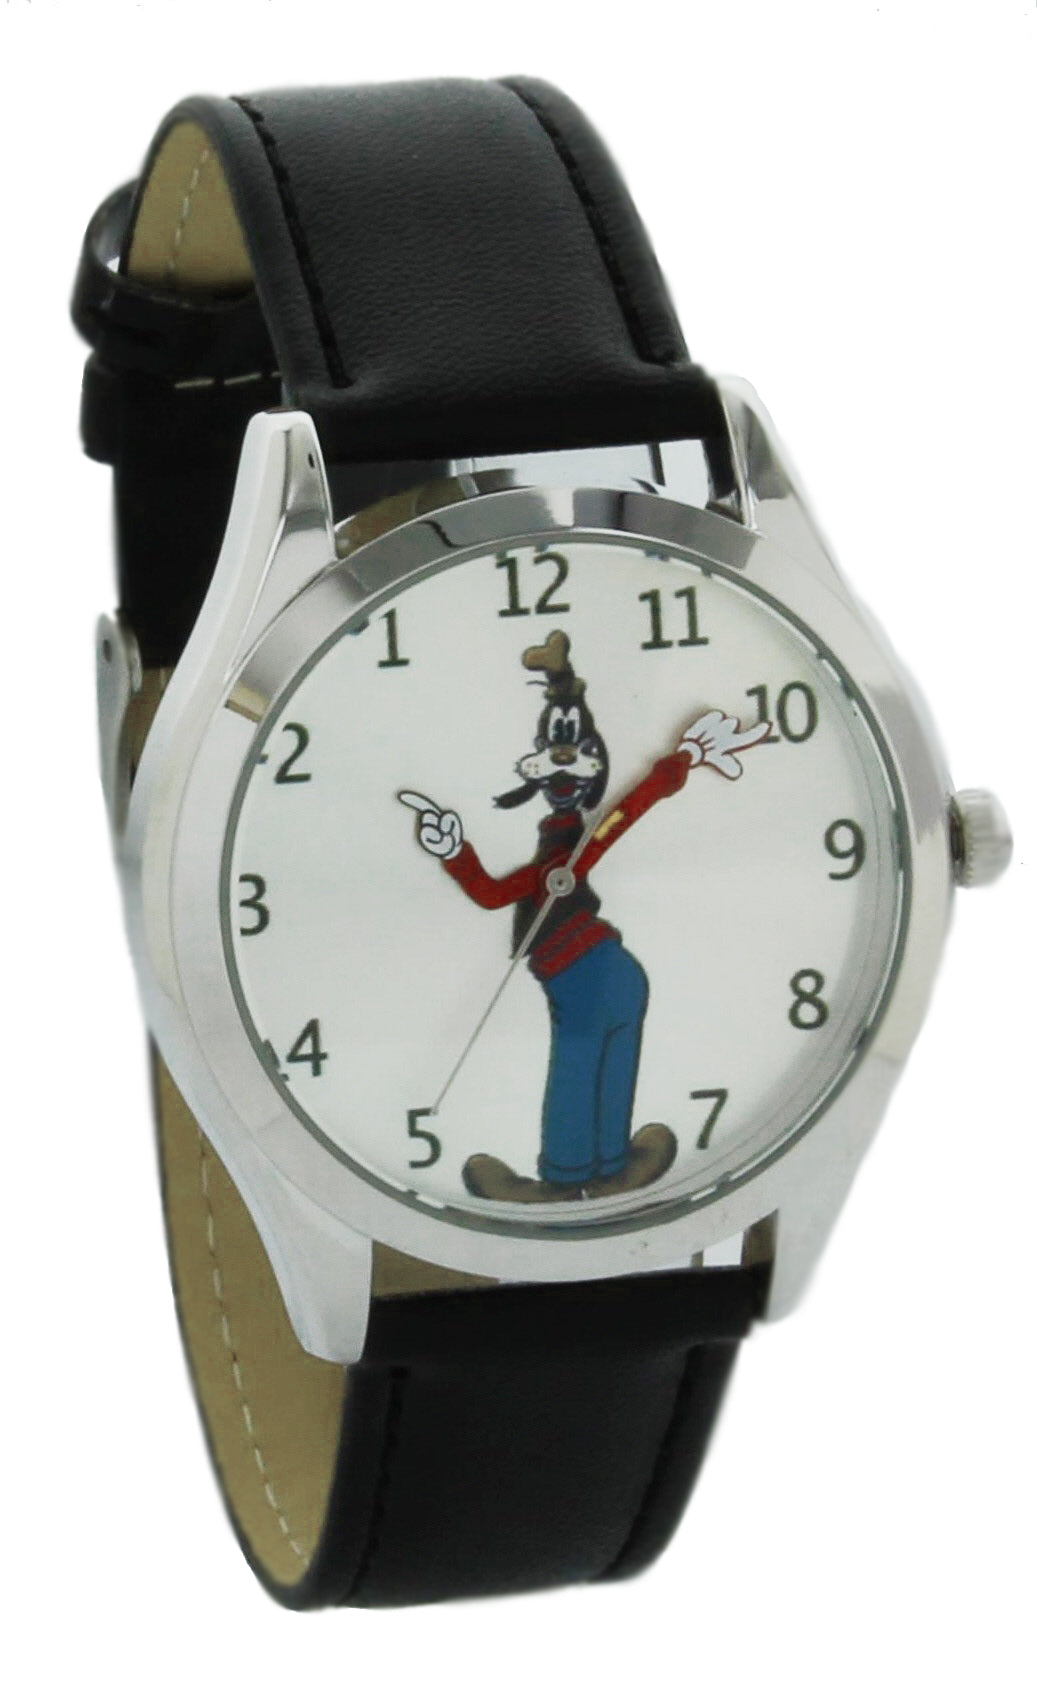 Model: Disney Vintage Style Backward Ticking Molded Hand Quartz Watch with Goofy